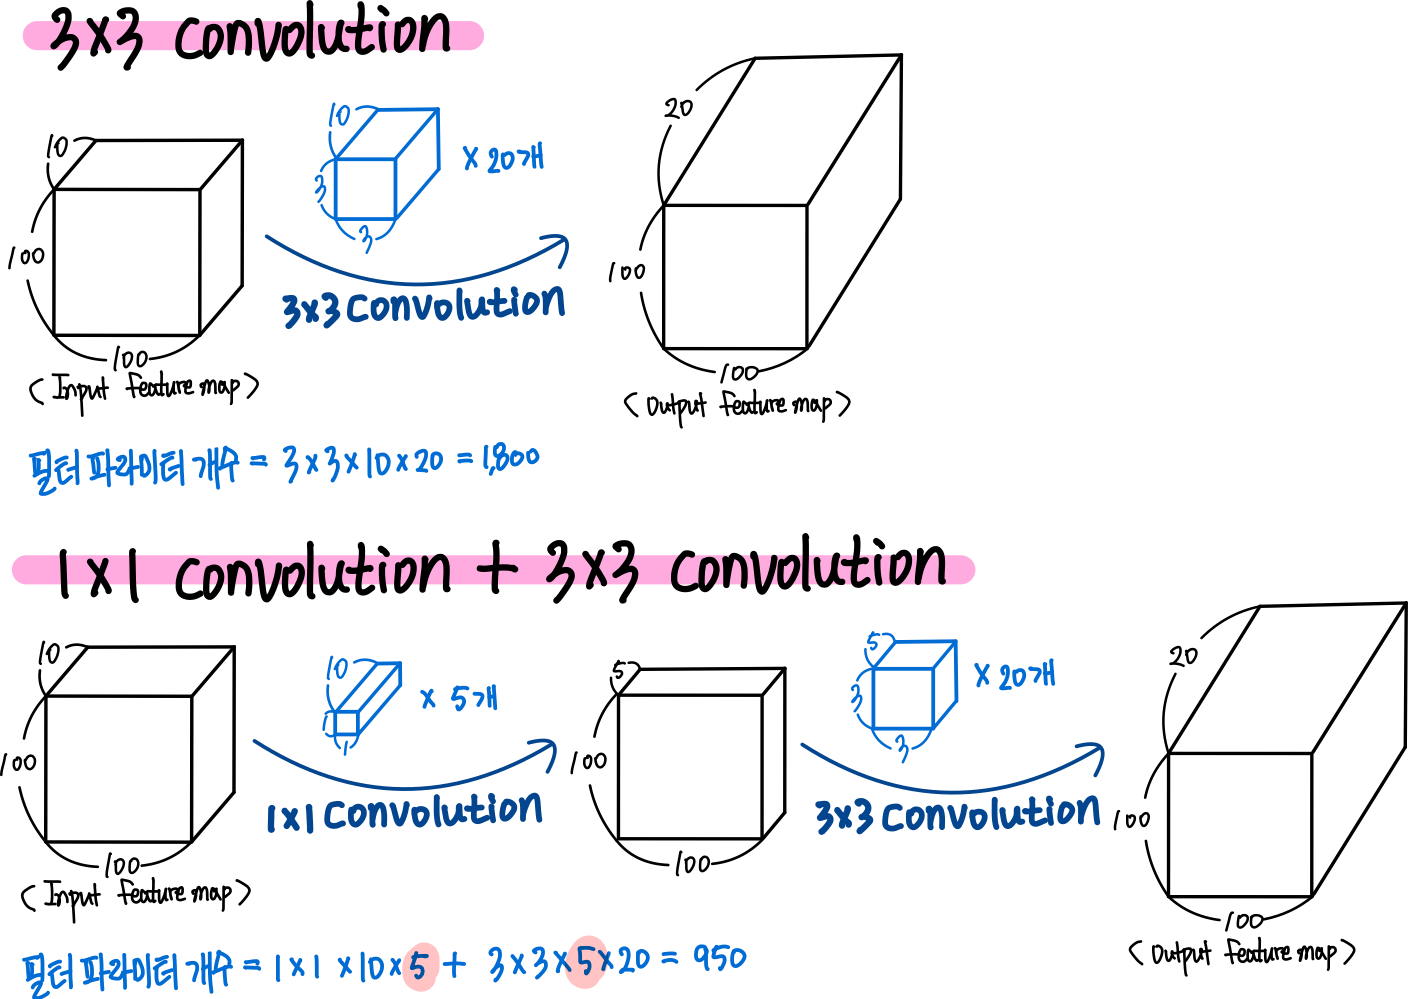 3x3 convolution과 1x1 convolution 연산량 비교